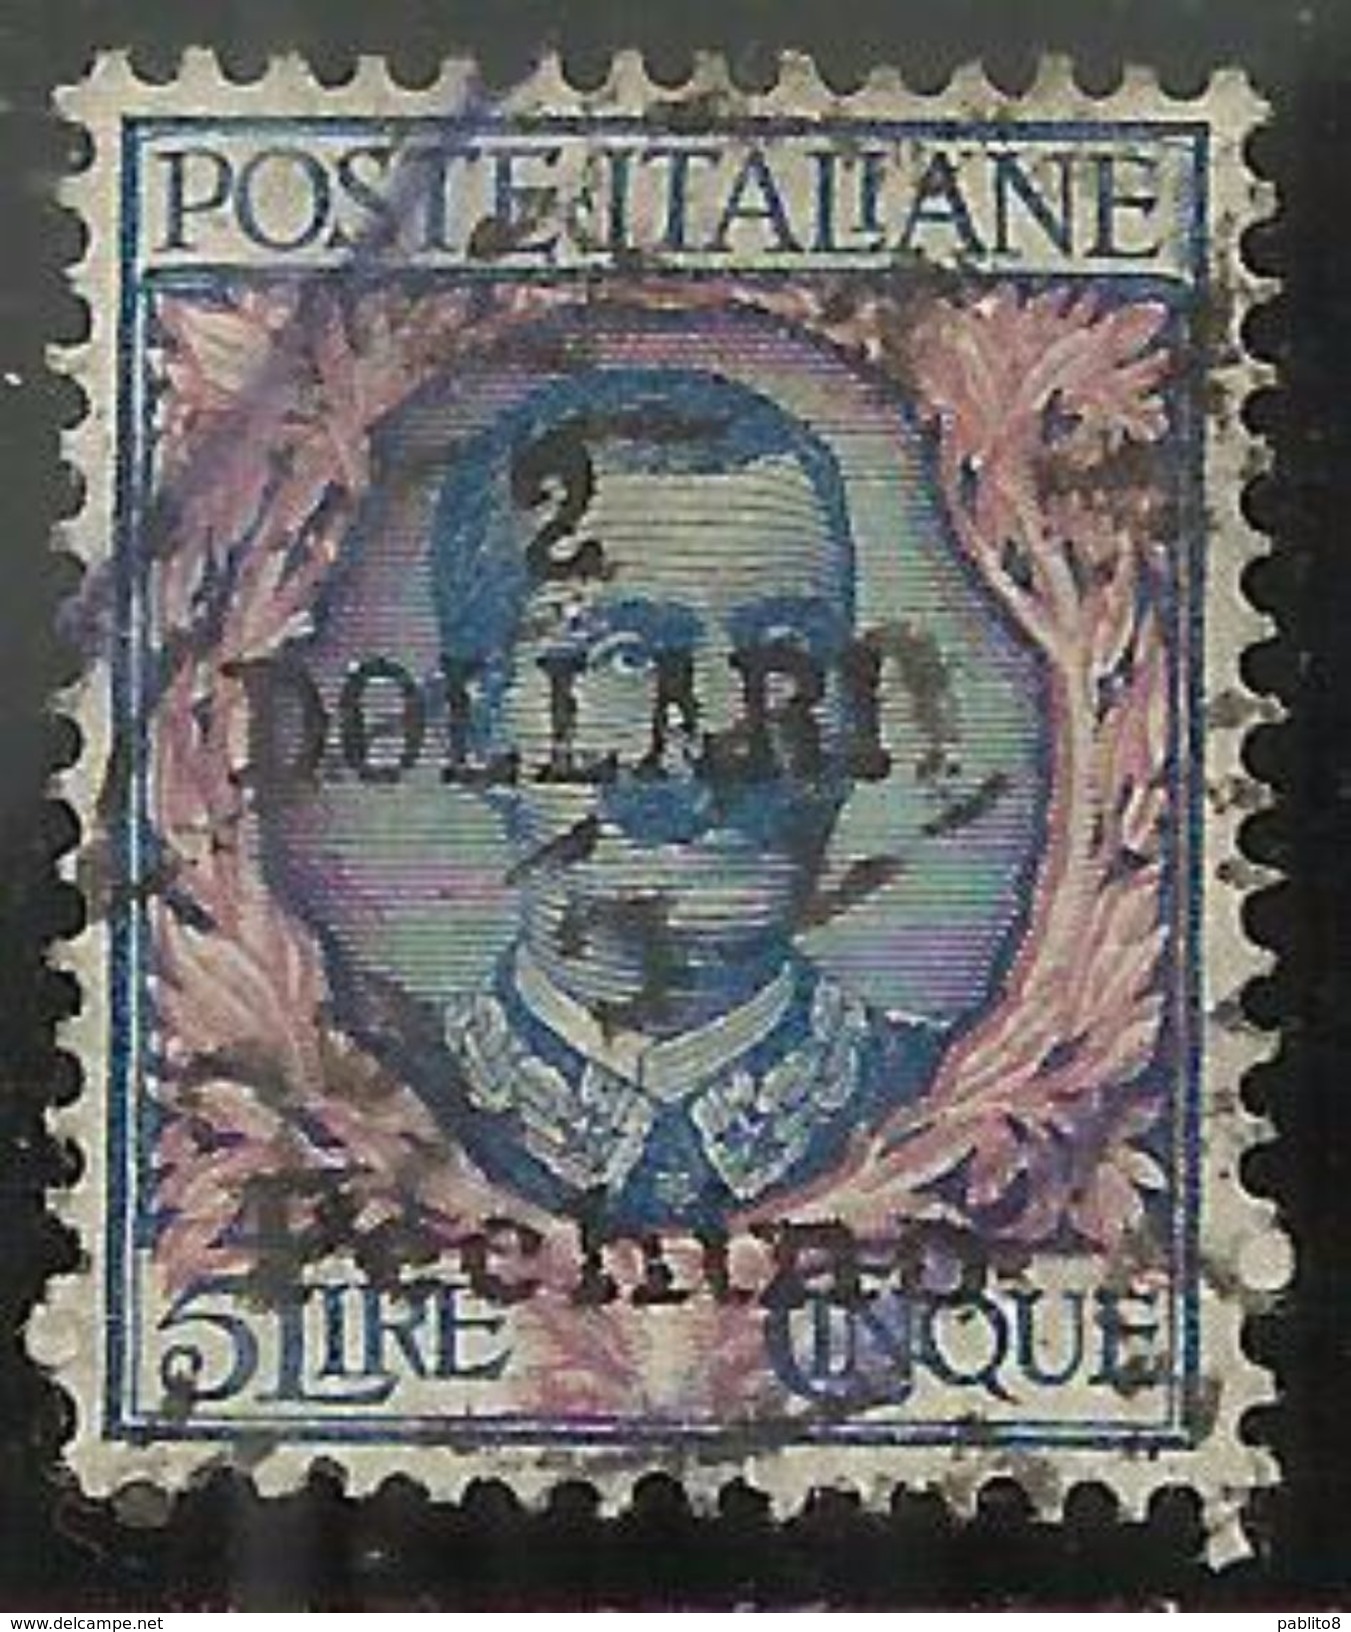 PECHINO BEIJING 1919 1920 SOPRASTAMPATO D'ITALIA ITALY OVERPRINTED 2 DOLLARI DOLLARS SU LIRE 5 USATO USED CERTIFICATO - Peking